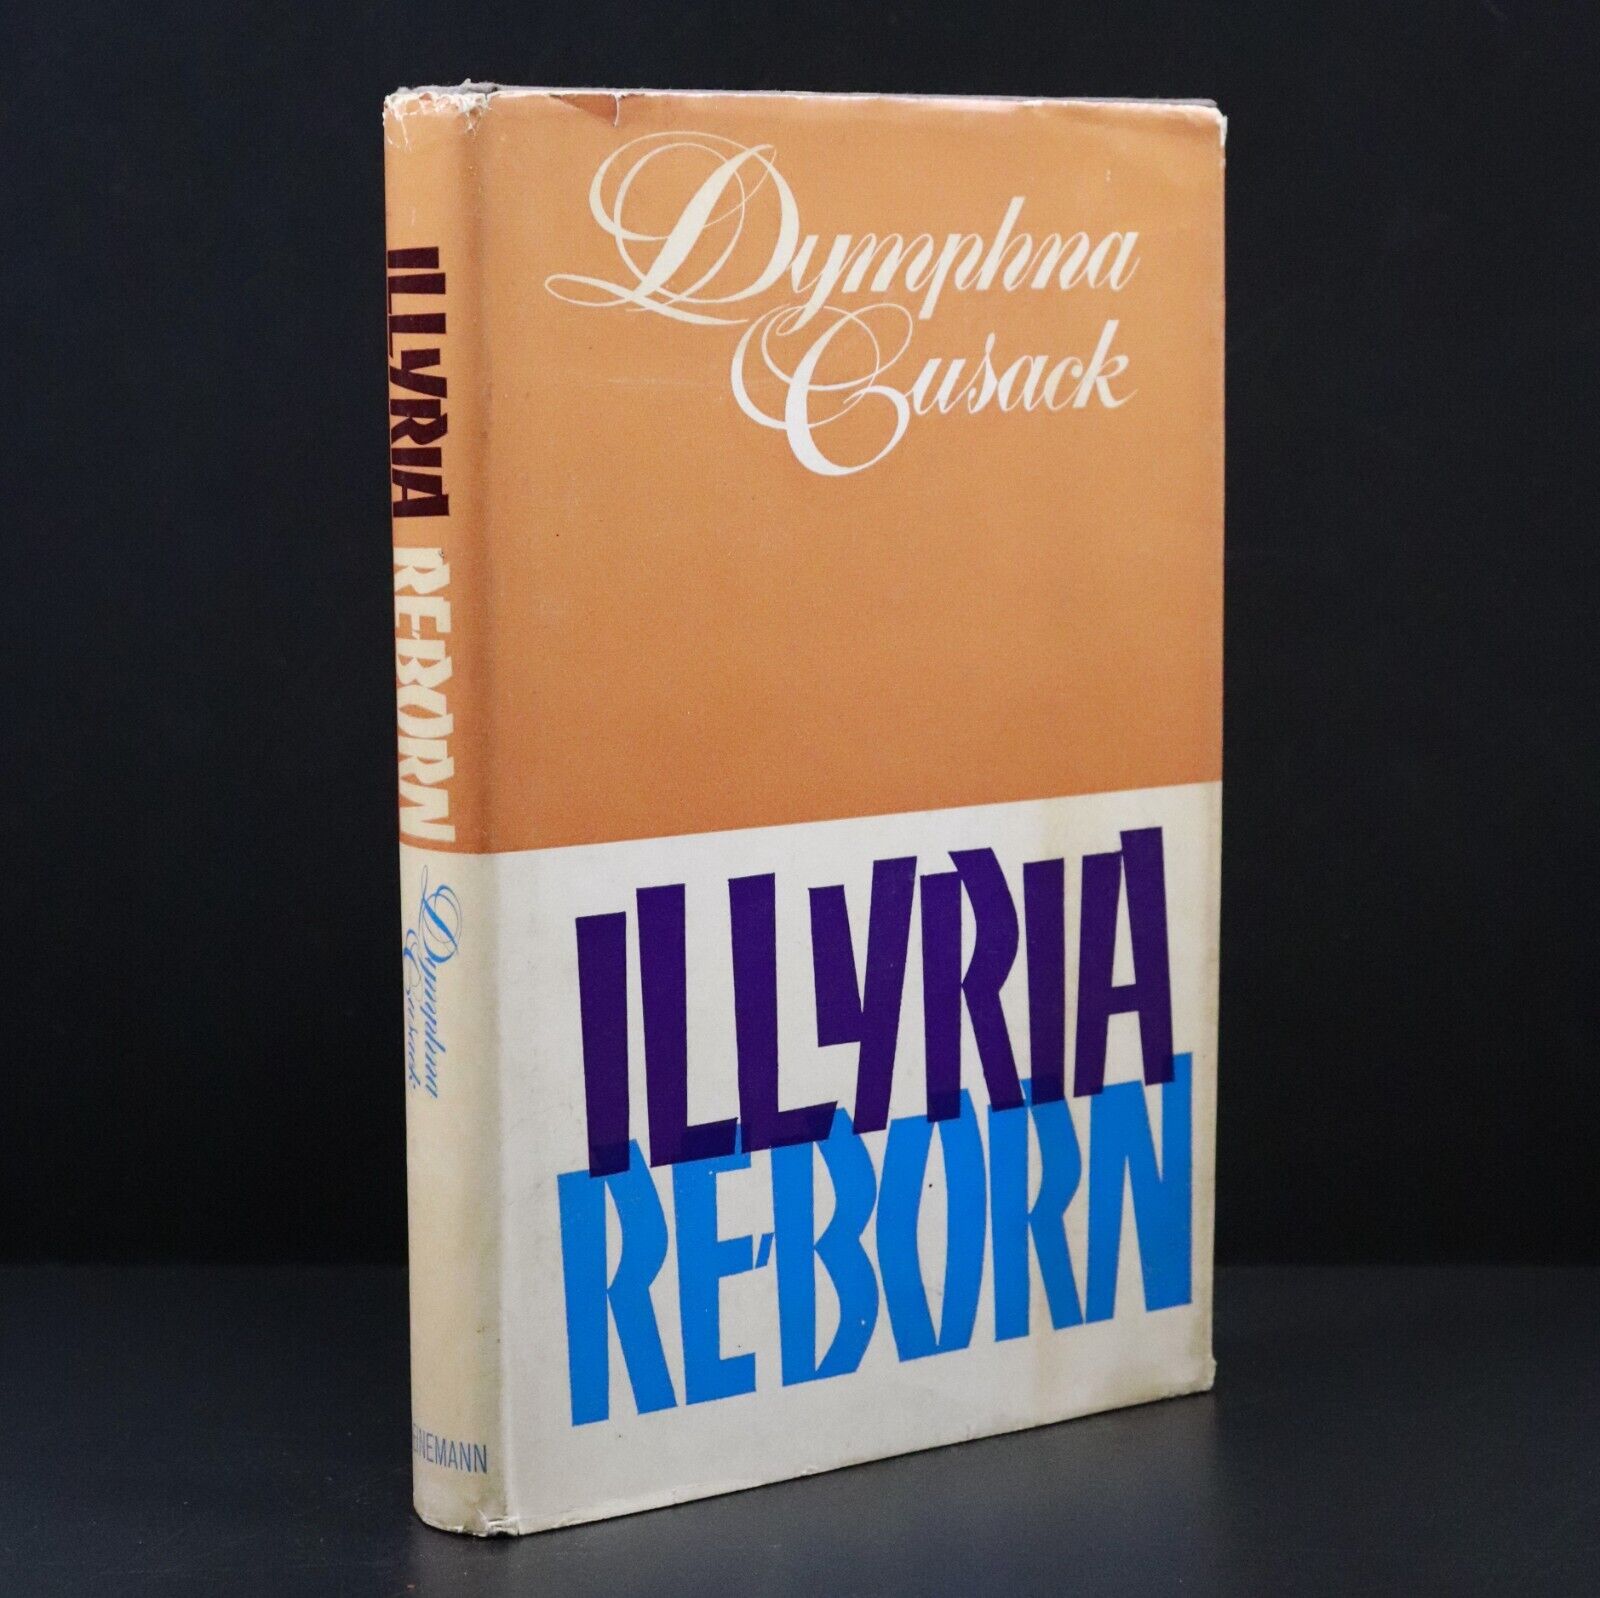 1966 Illyria Reborn by Dymphna Cusack Australian Travel Writer To Albania Book